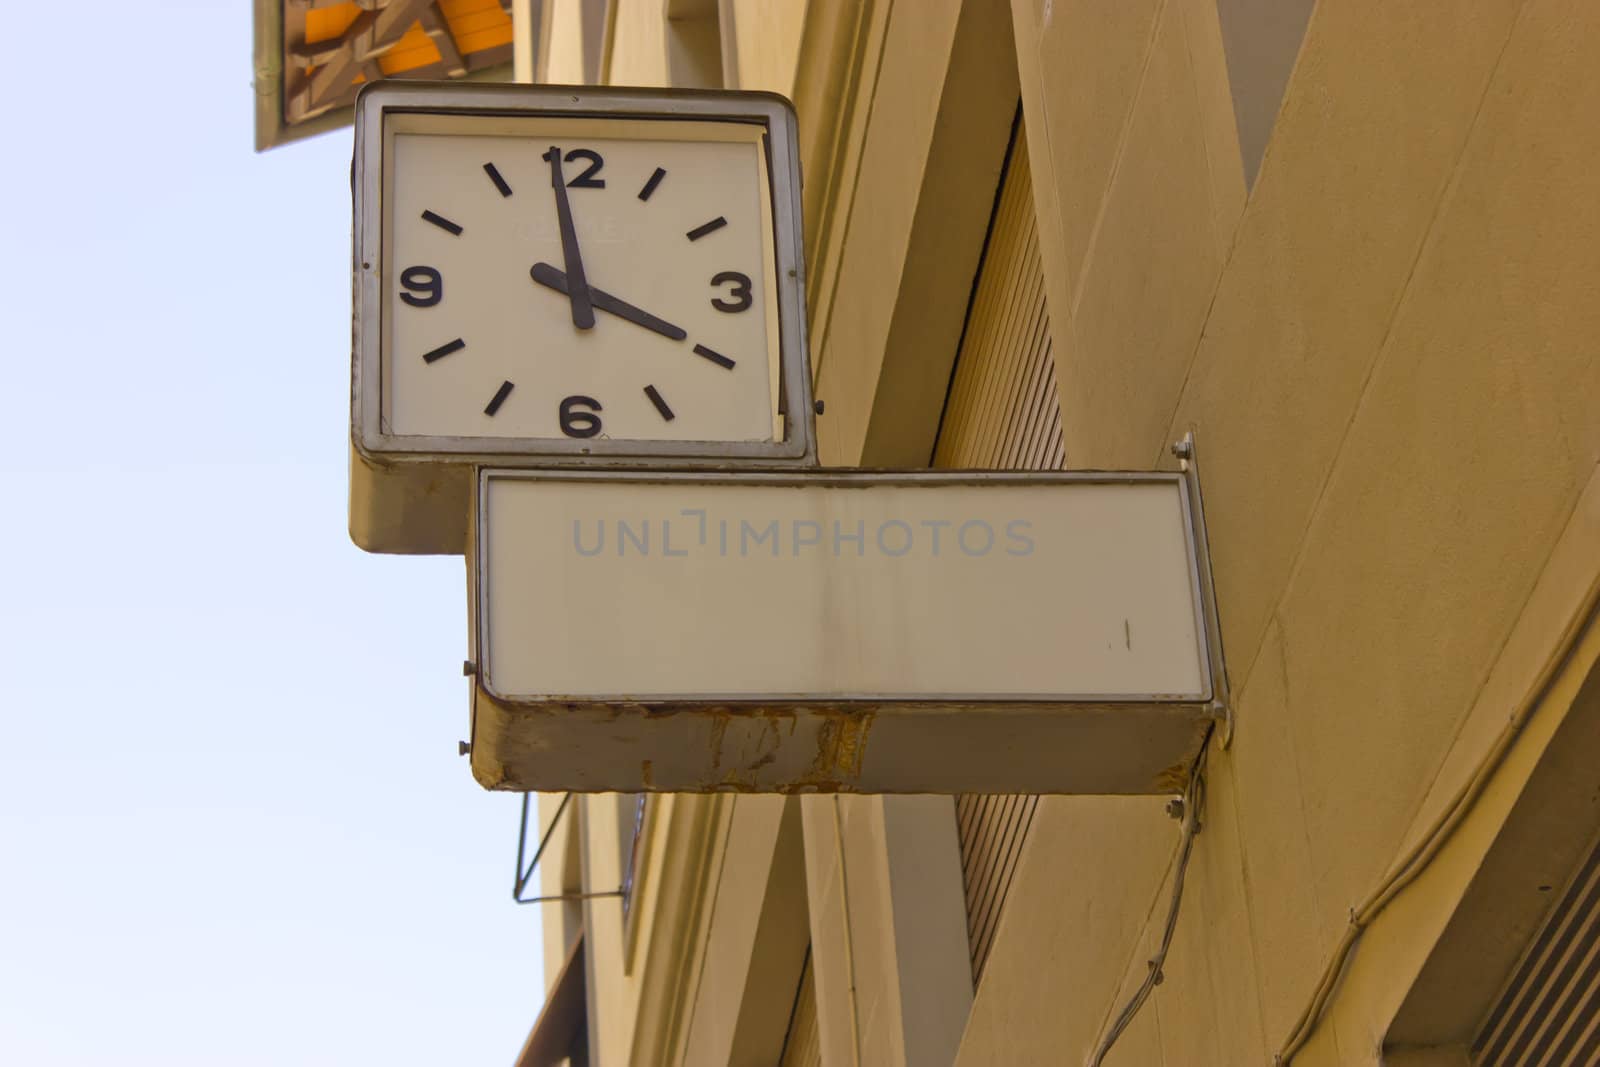 Street clock by rgbpepper